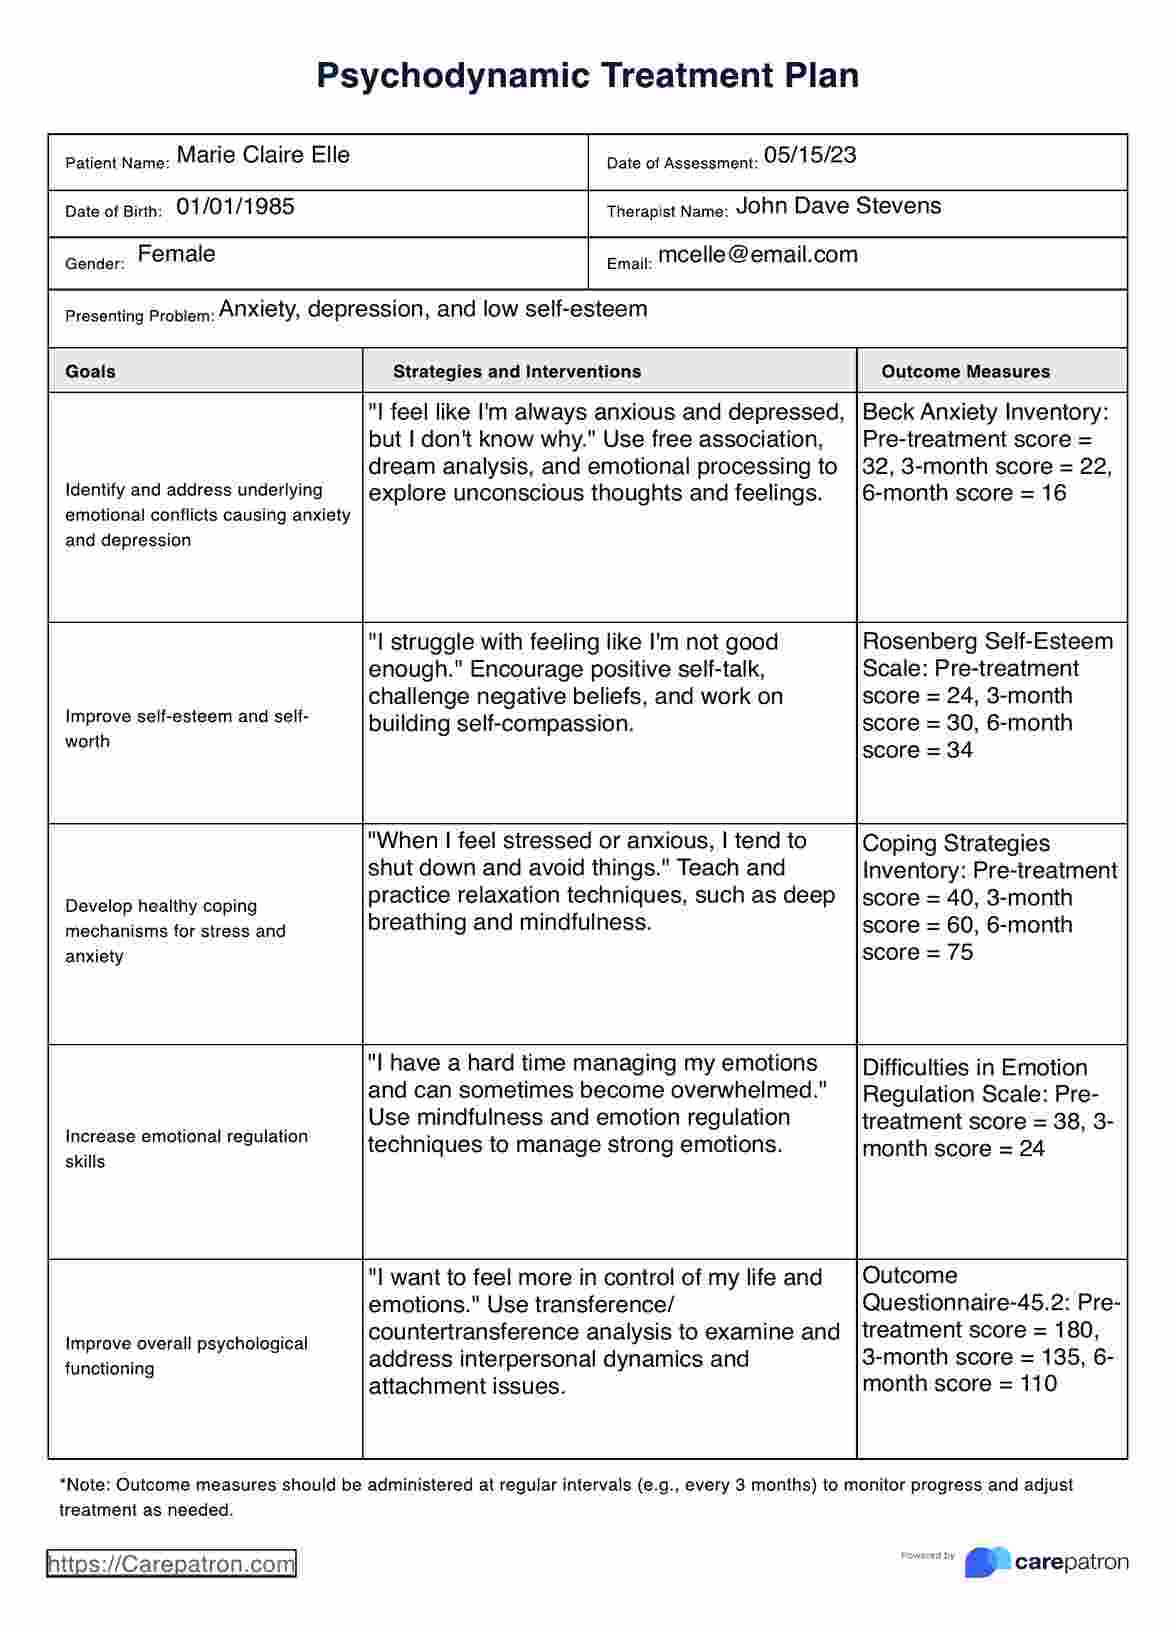 Psychodynamic Treatment Plan PDF Example